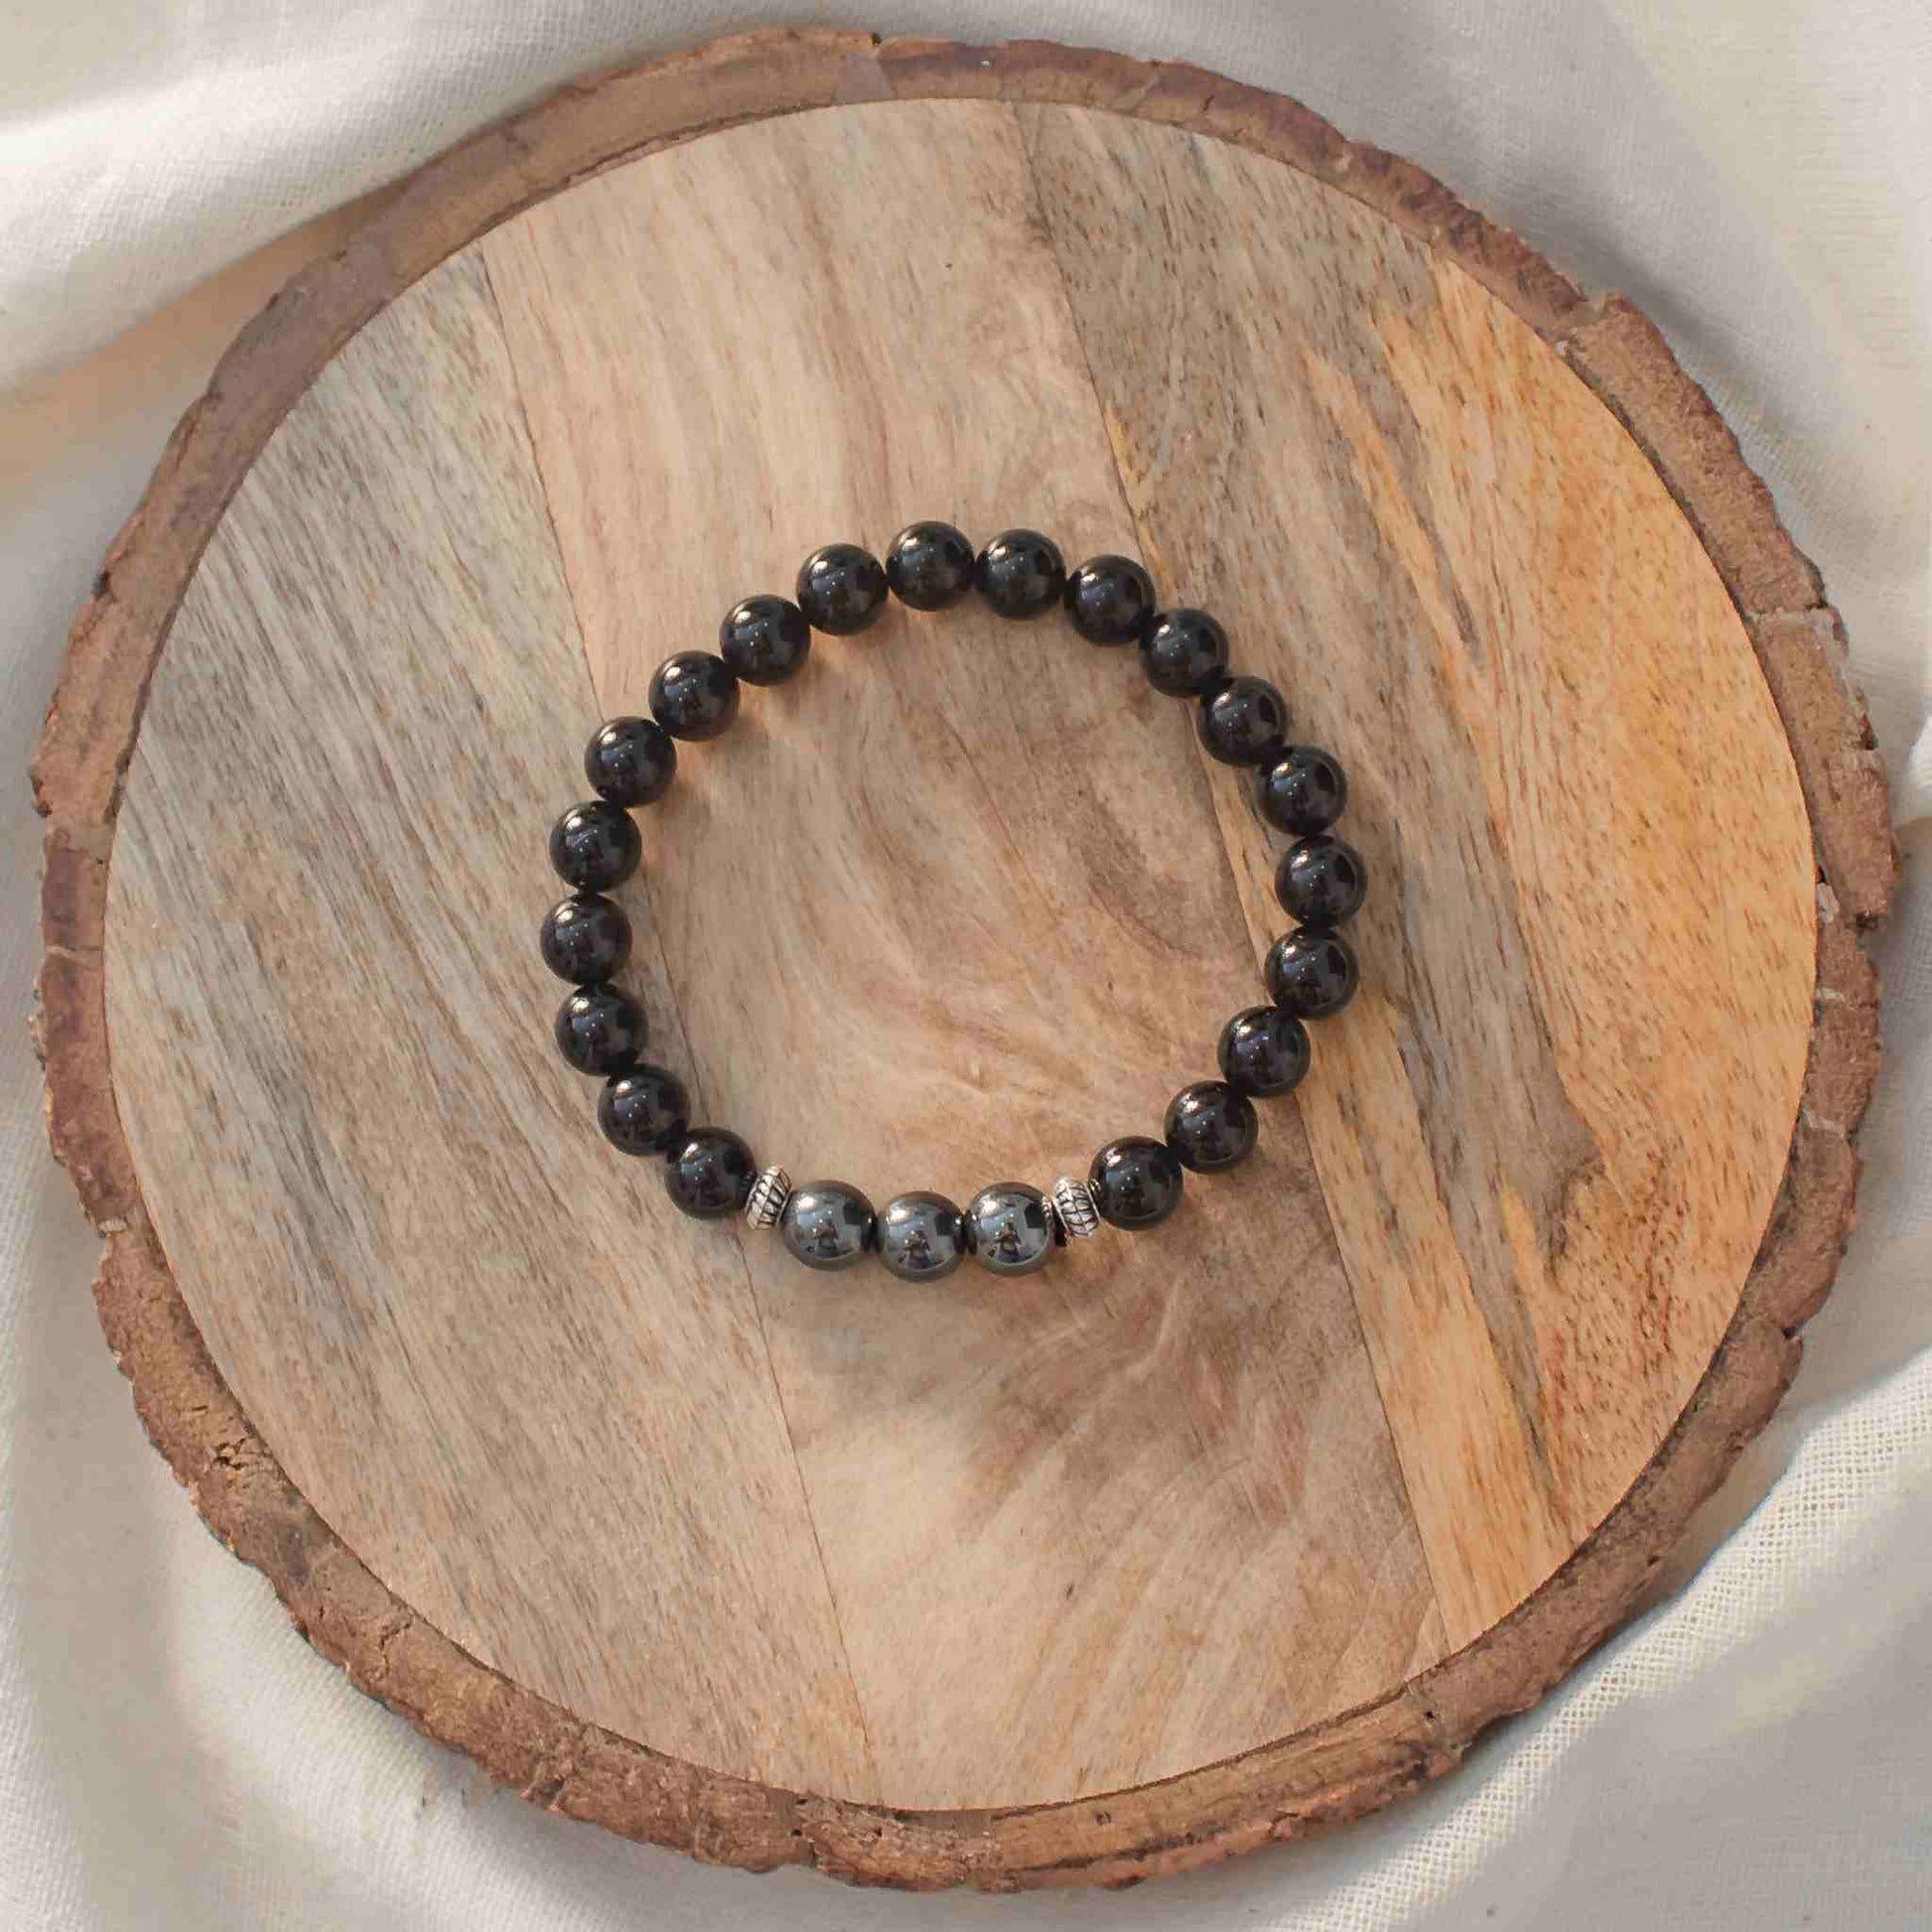 Black Tourmaline and Hematite Bracelet 8mm beads